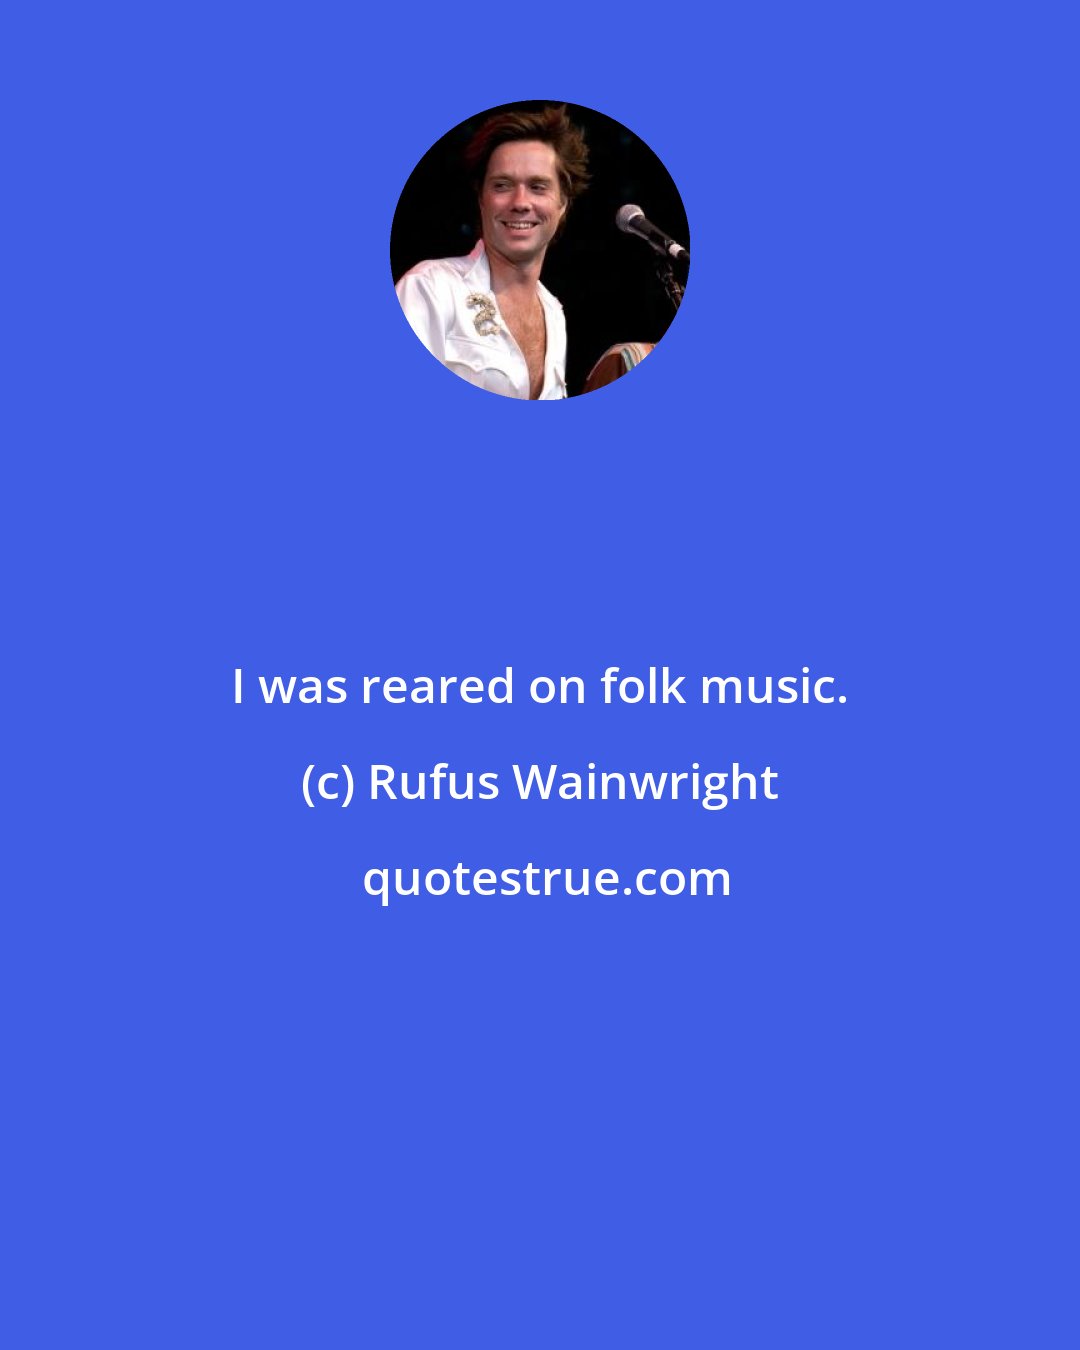 Rufus Wainwright: I was reared on folk music.